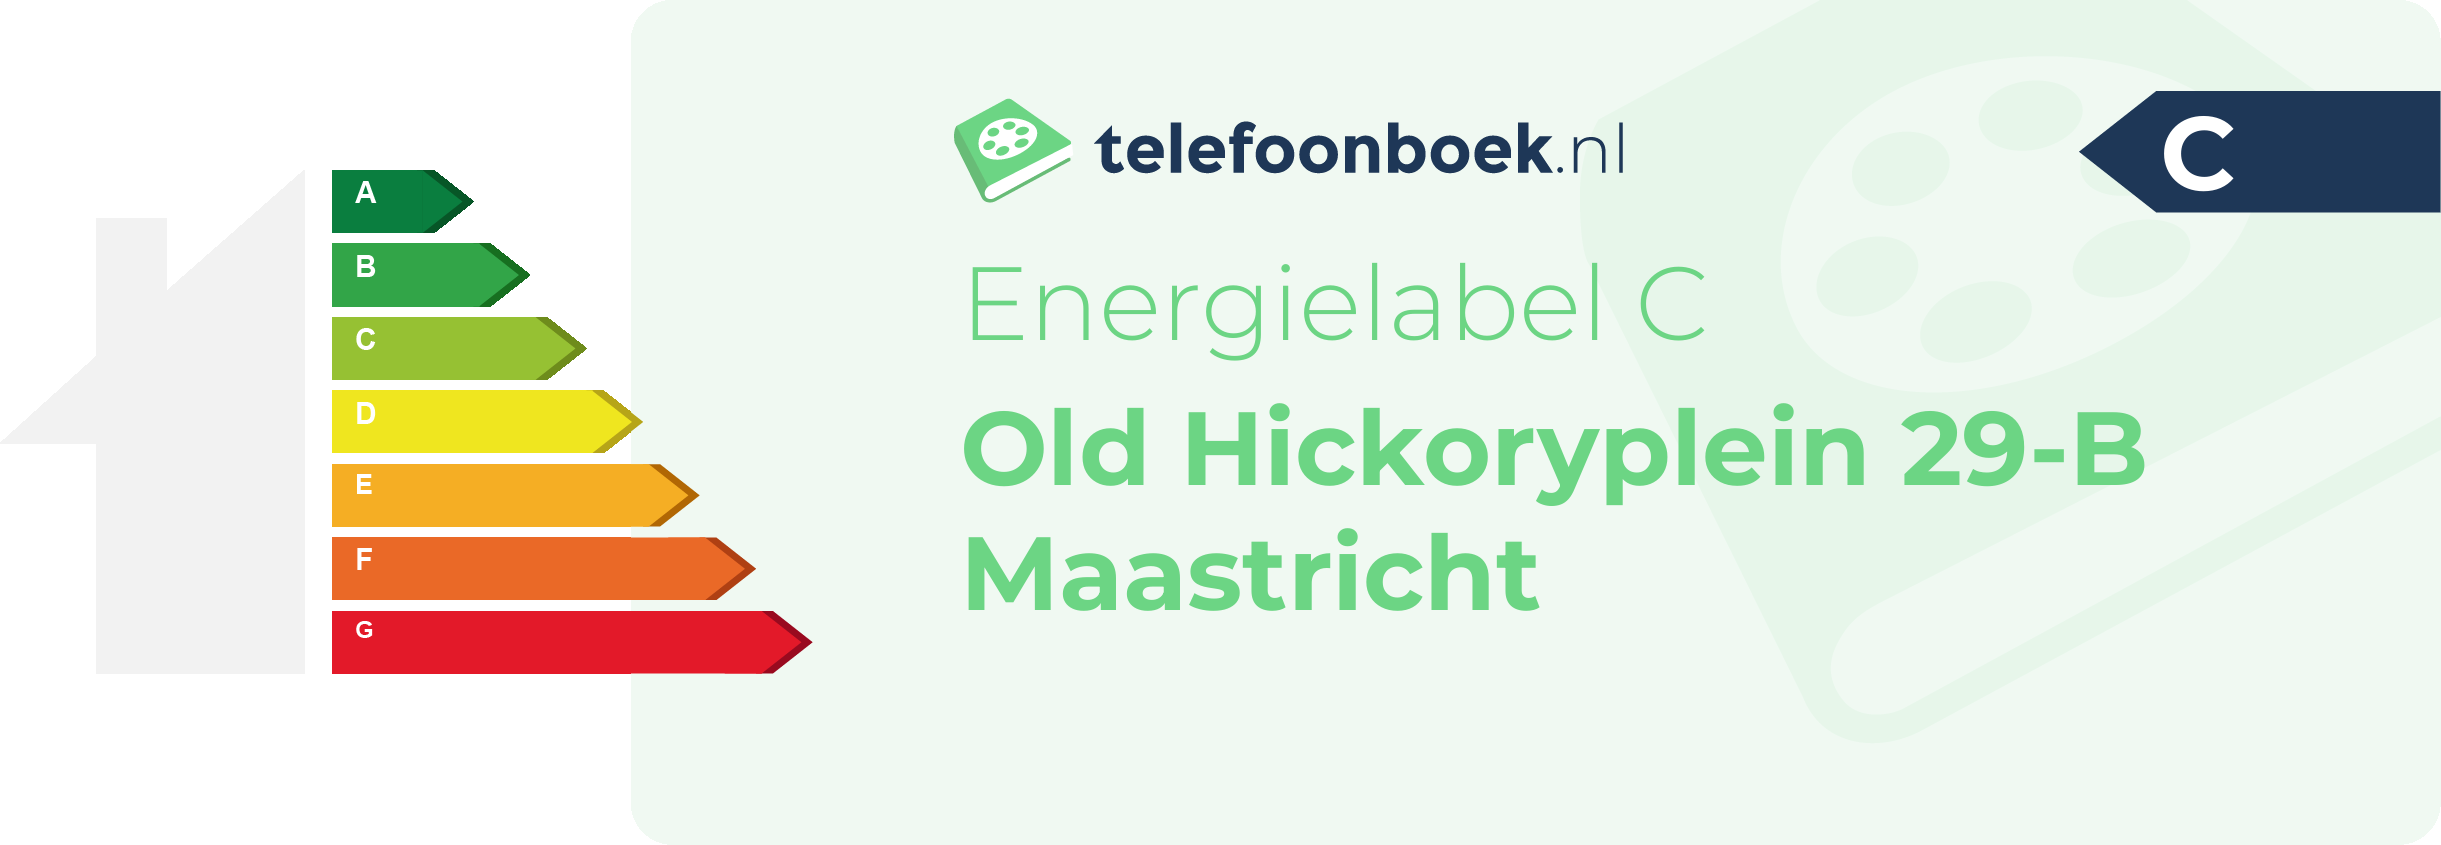 Energielabel Old Hickoryplein 29-B Maastricht